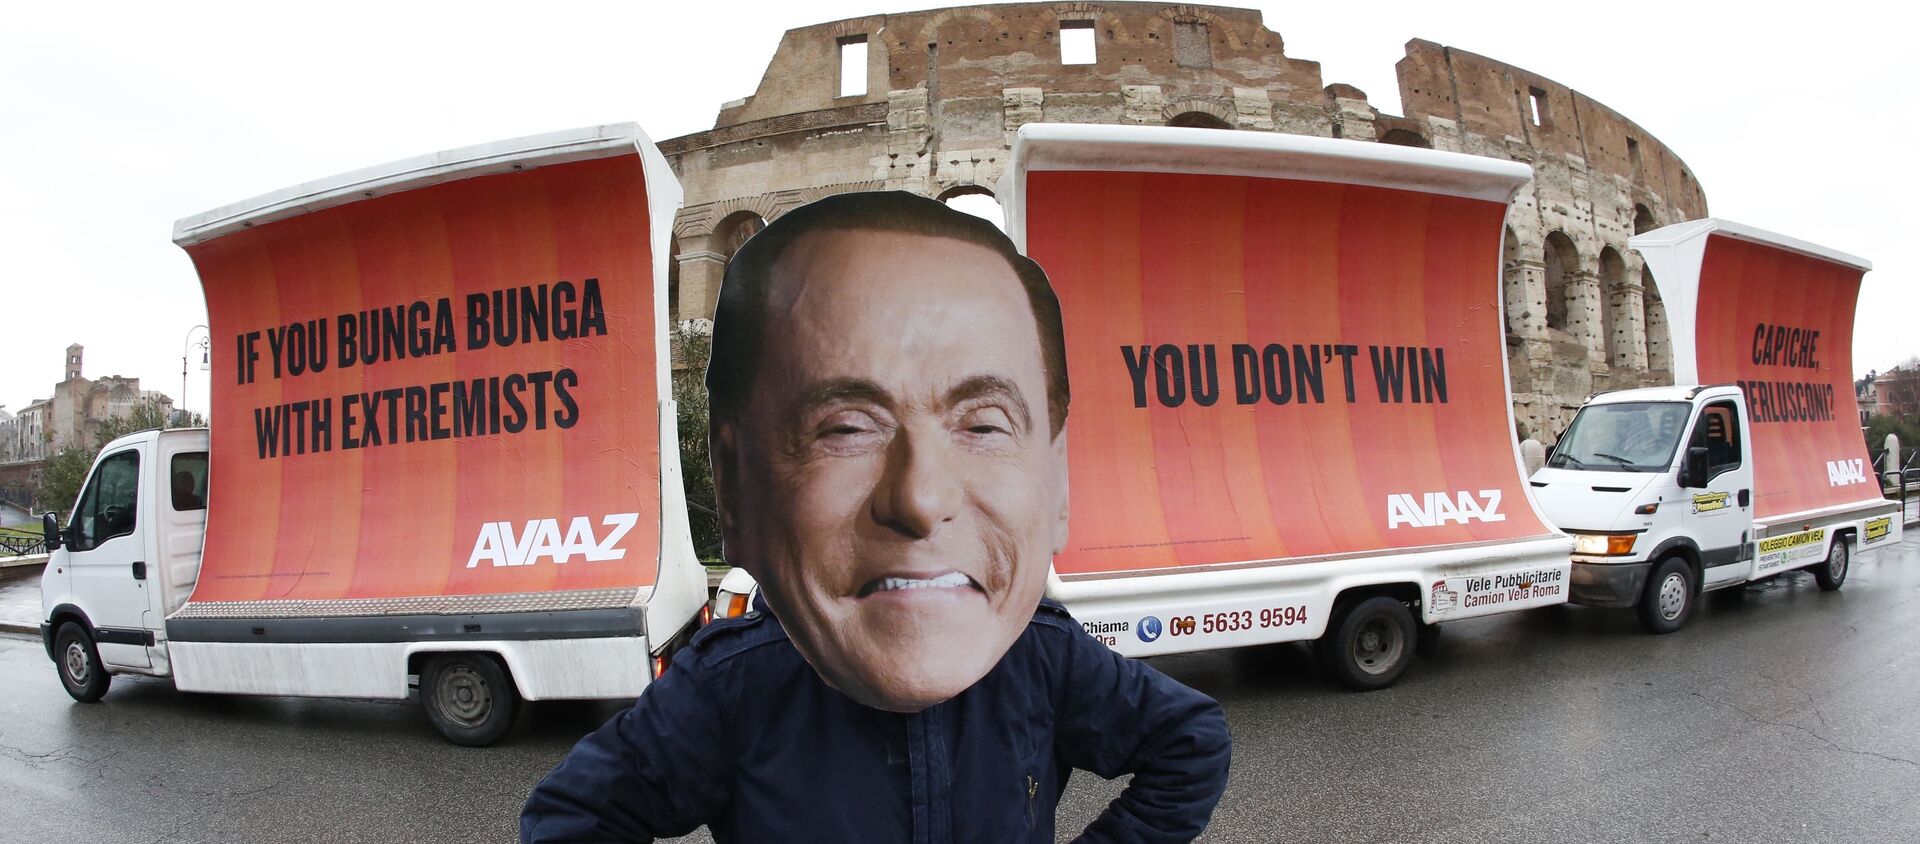 Silvio Berlusconi maskeli protesto, Avaaz  organizasyonu, 'If you Bunga Bunga with extremists, you don't win. Capiche, Berlusconi?', Kolezyum, Roma - Sputnik Türkiye, 1920, 13.03.2018